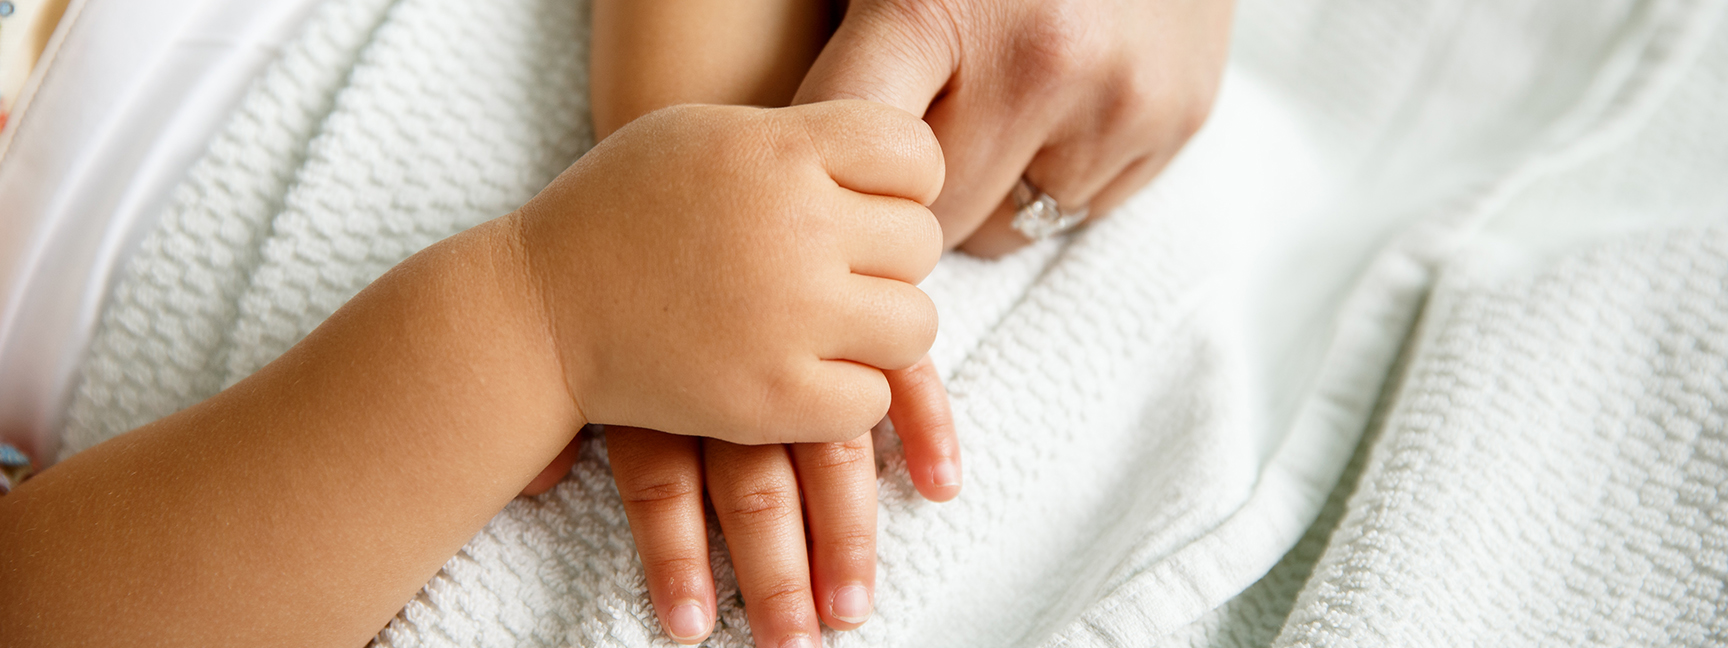 Child's hand gripping parent's finger